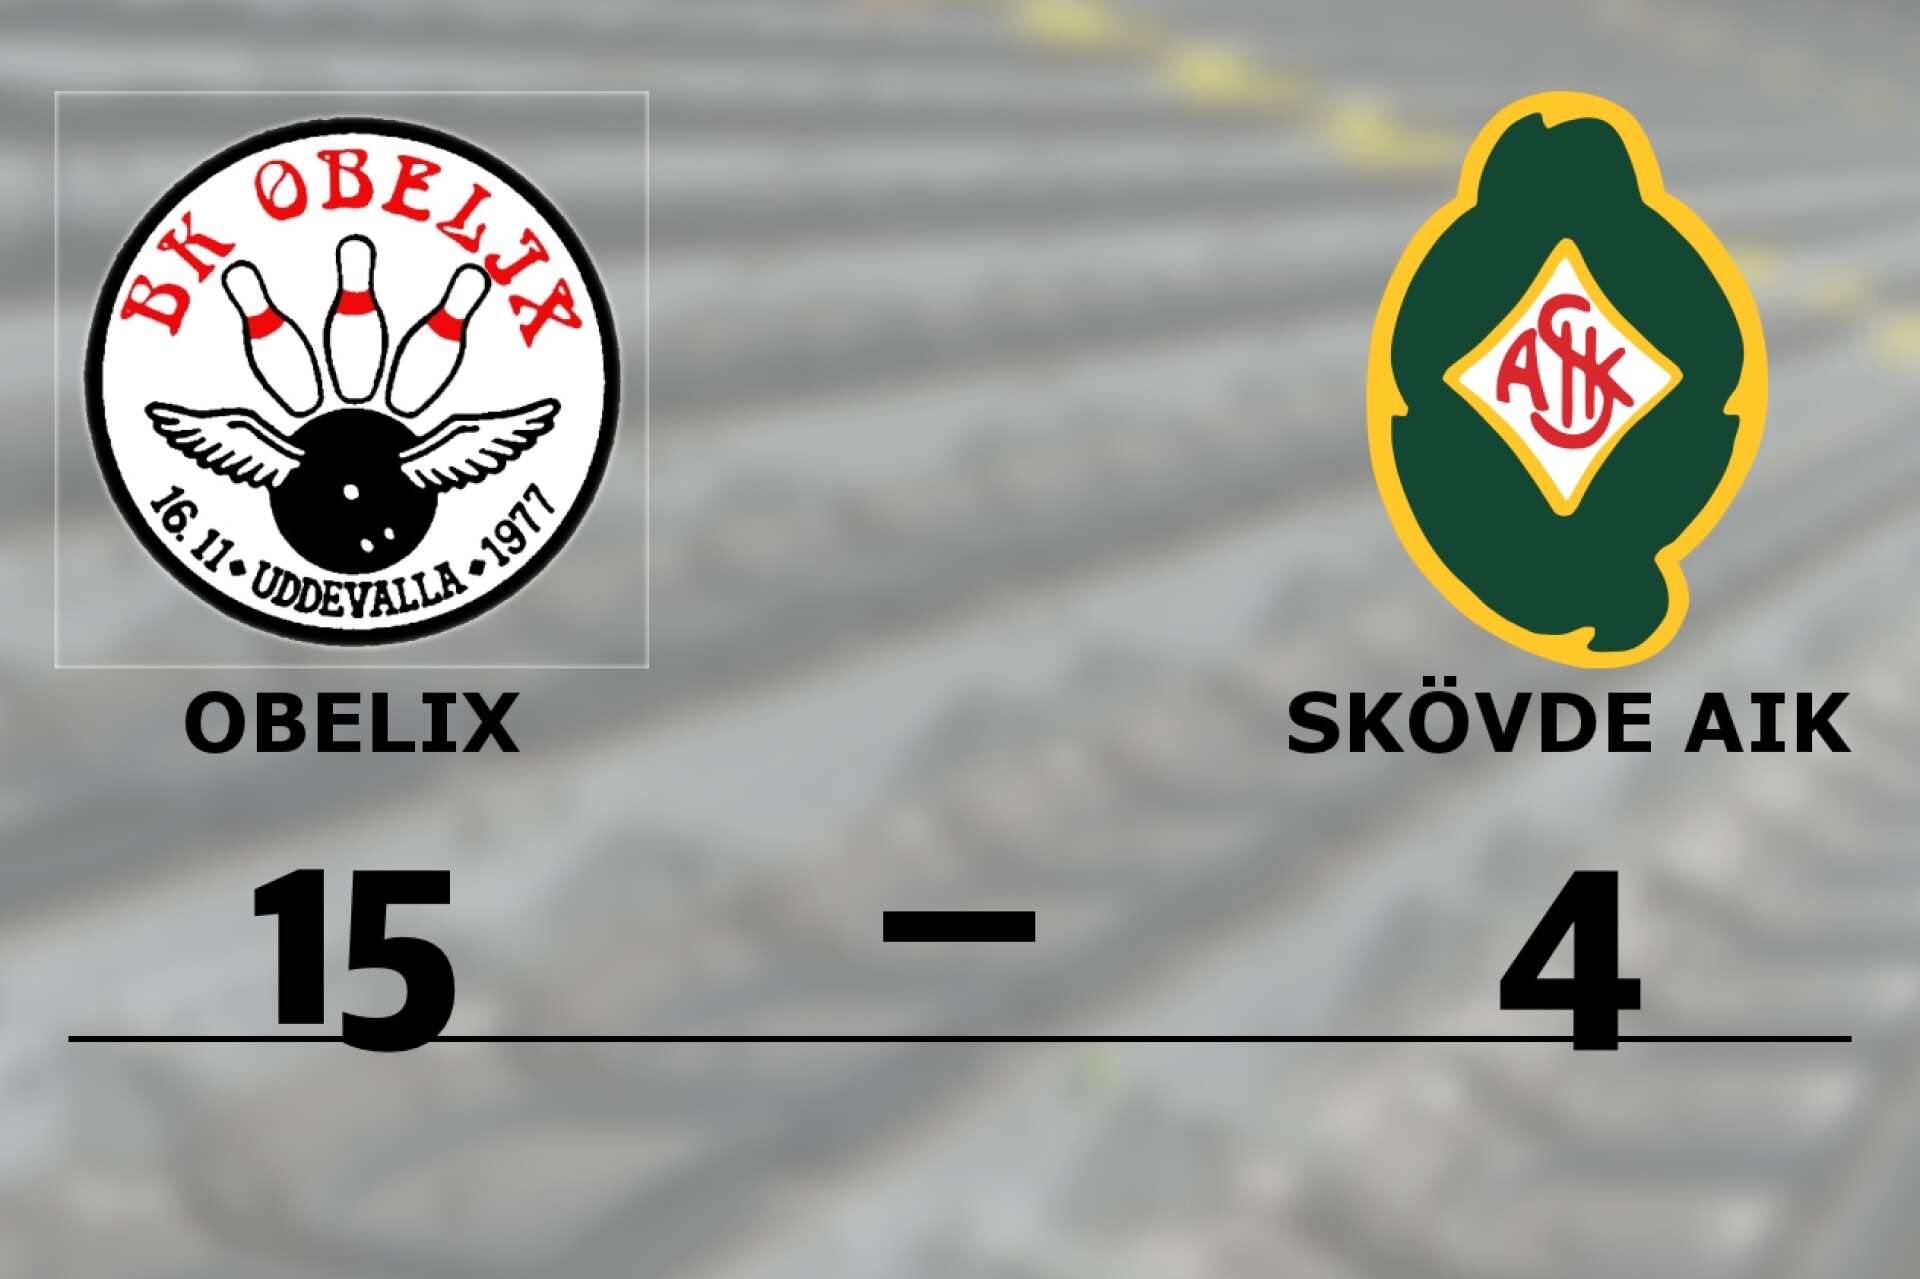 BK Team Obelix vann mot Skövde AIK